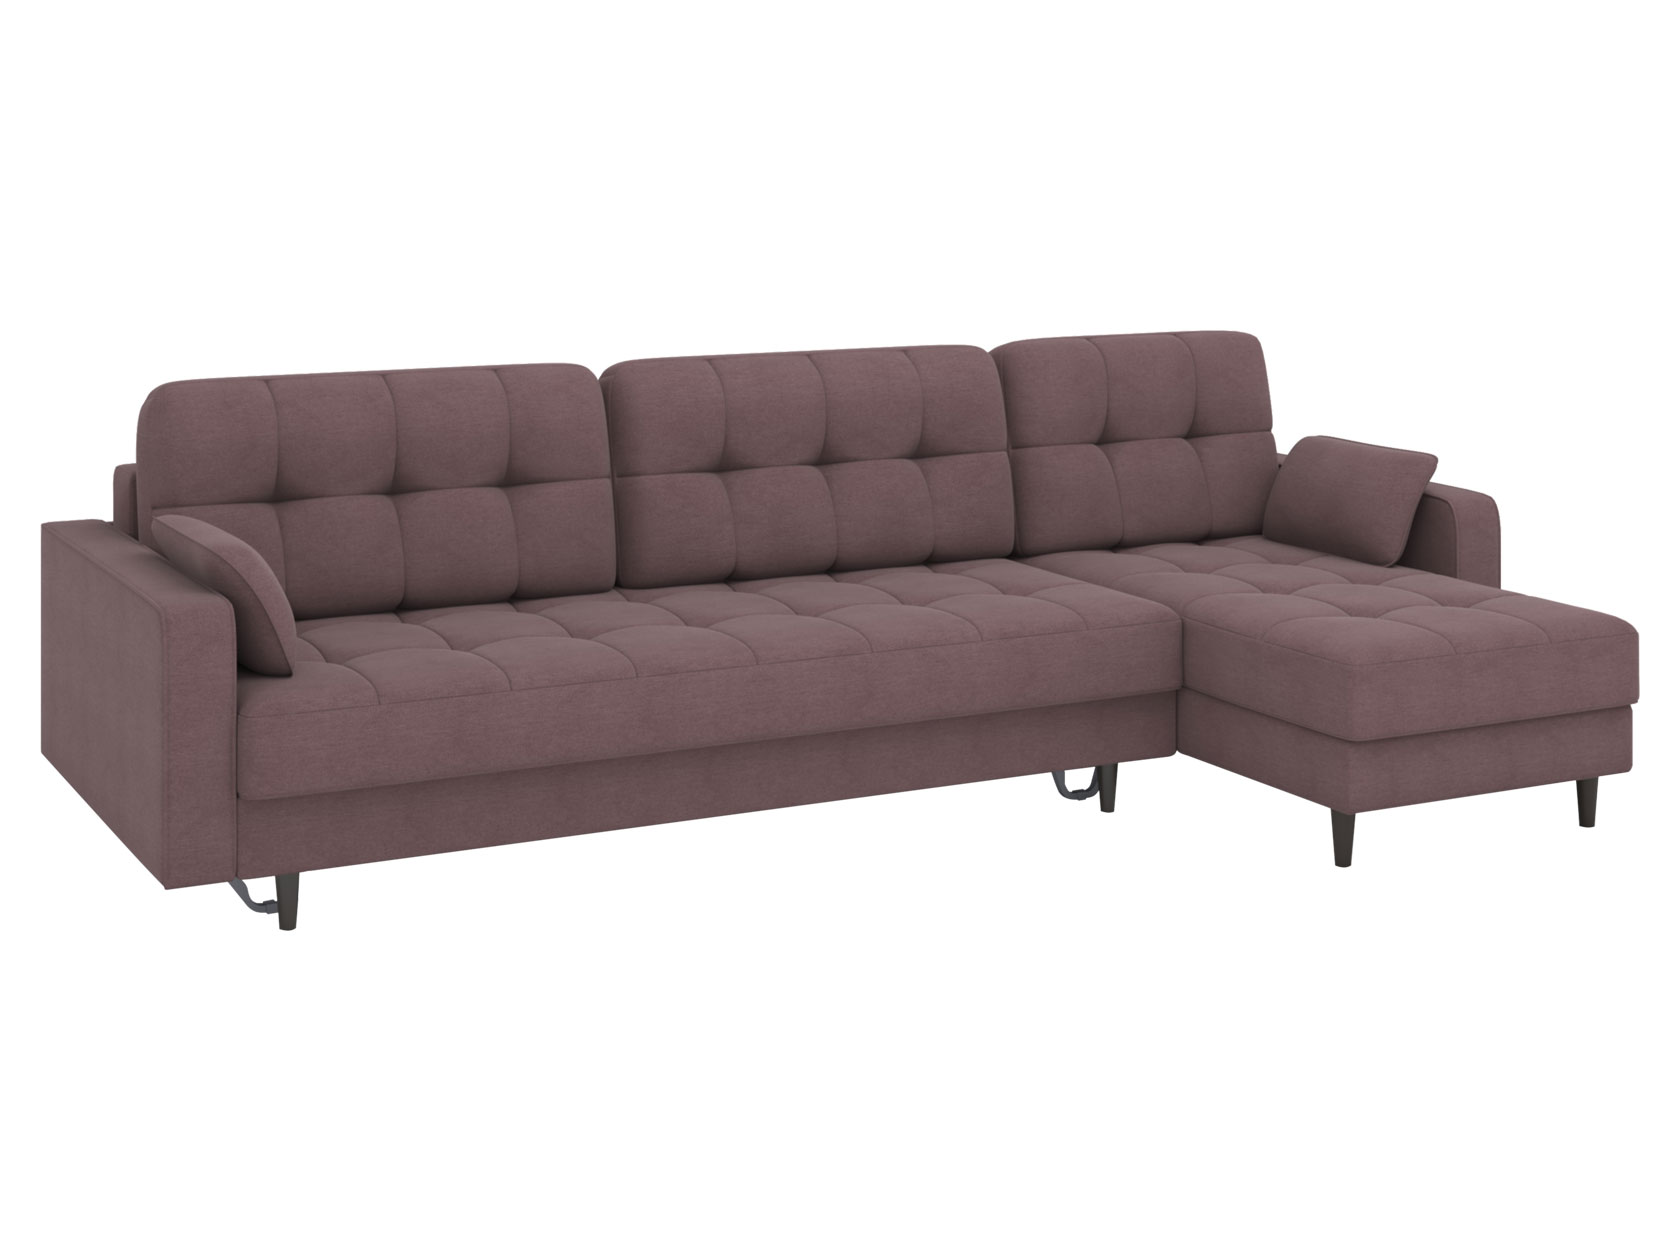 Угловой диван с оттоманкой Диван Санфорд с оттоманкой макси Санфорд Макси фото 7